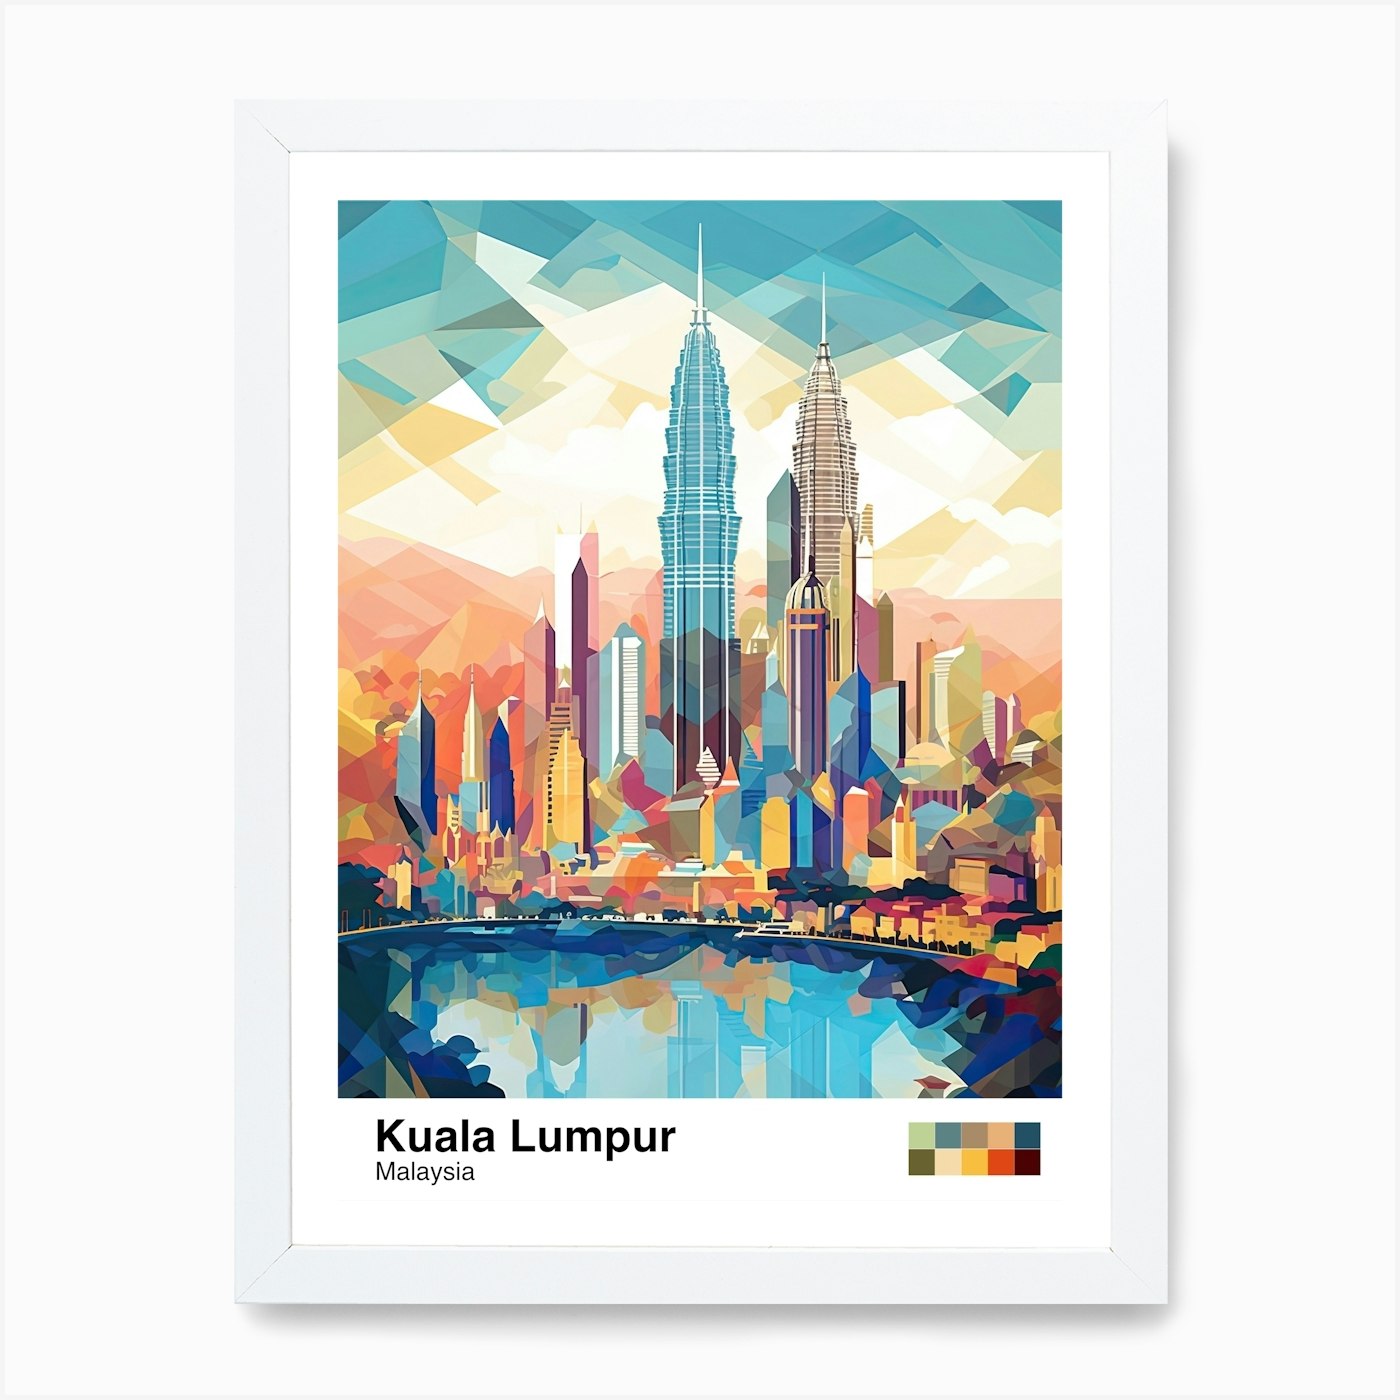 Kuala Lumpur, Malaysia, Wonders - 1 Poster by Illustration Print Geometric Gallery Art Geometric Fy